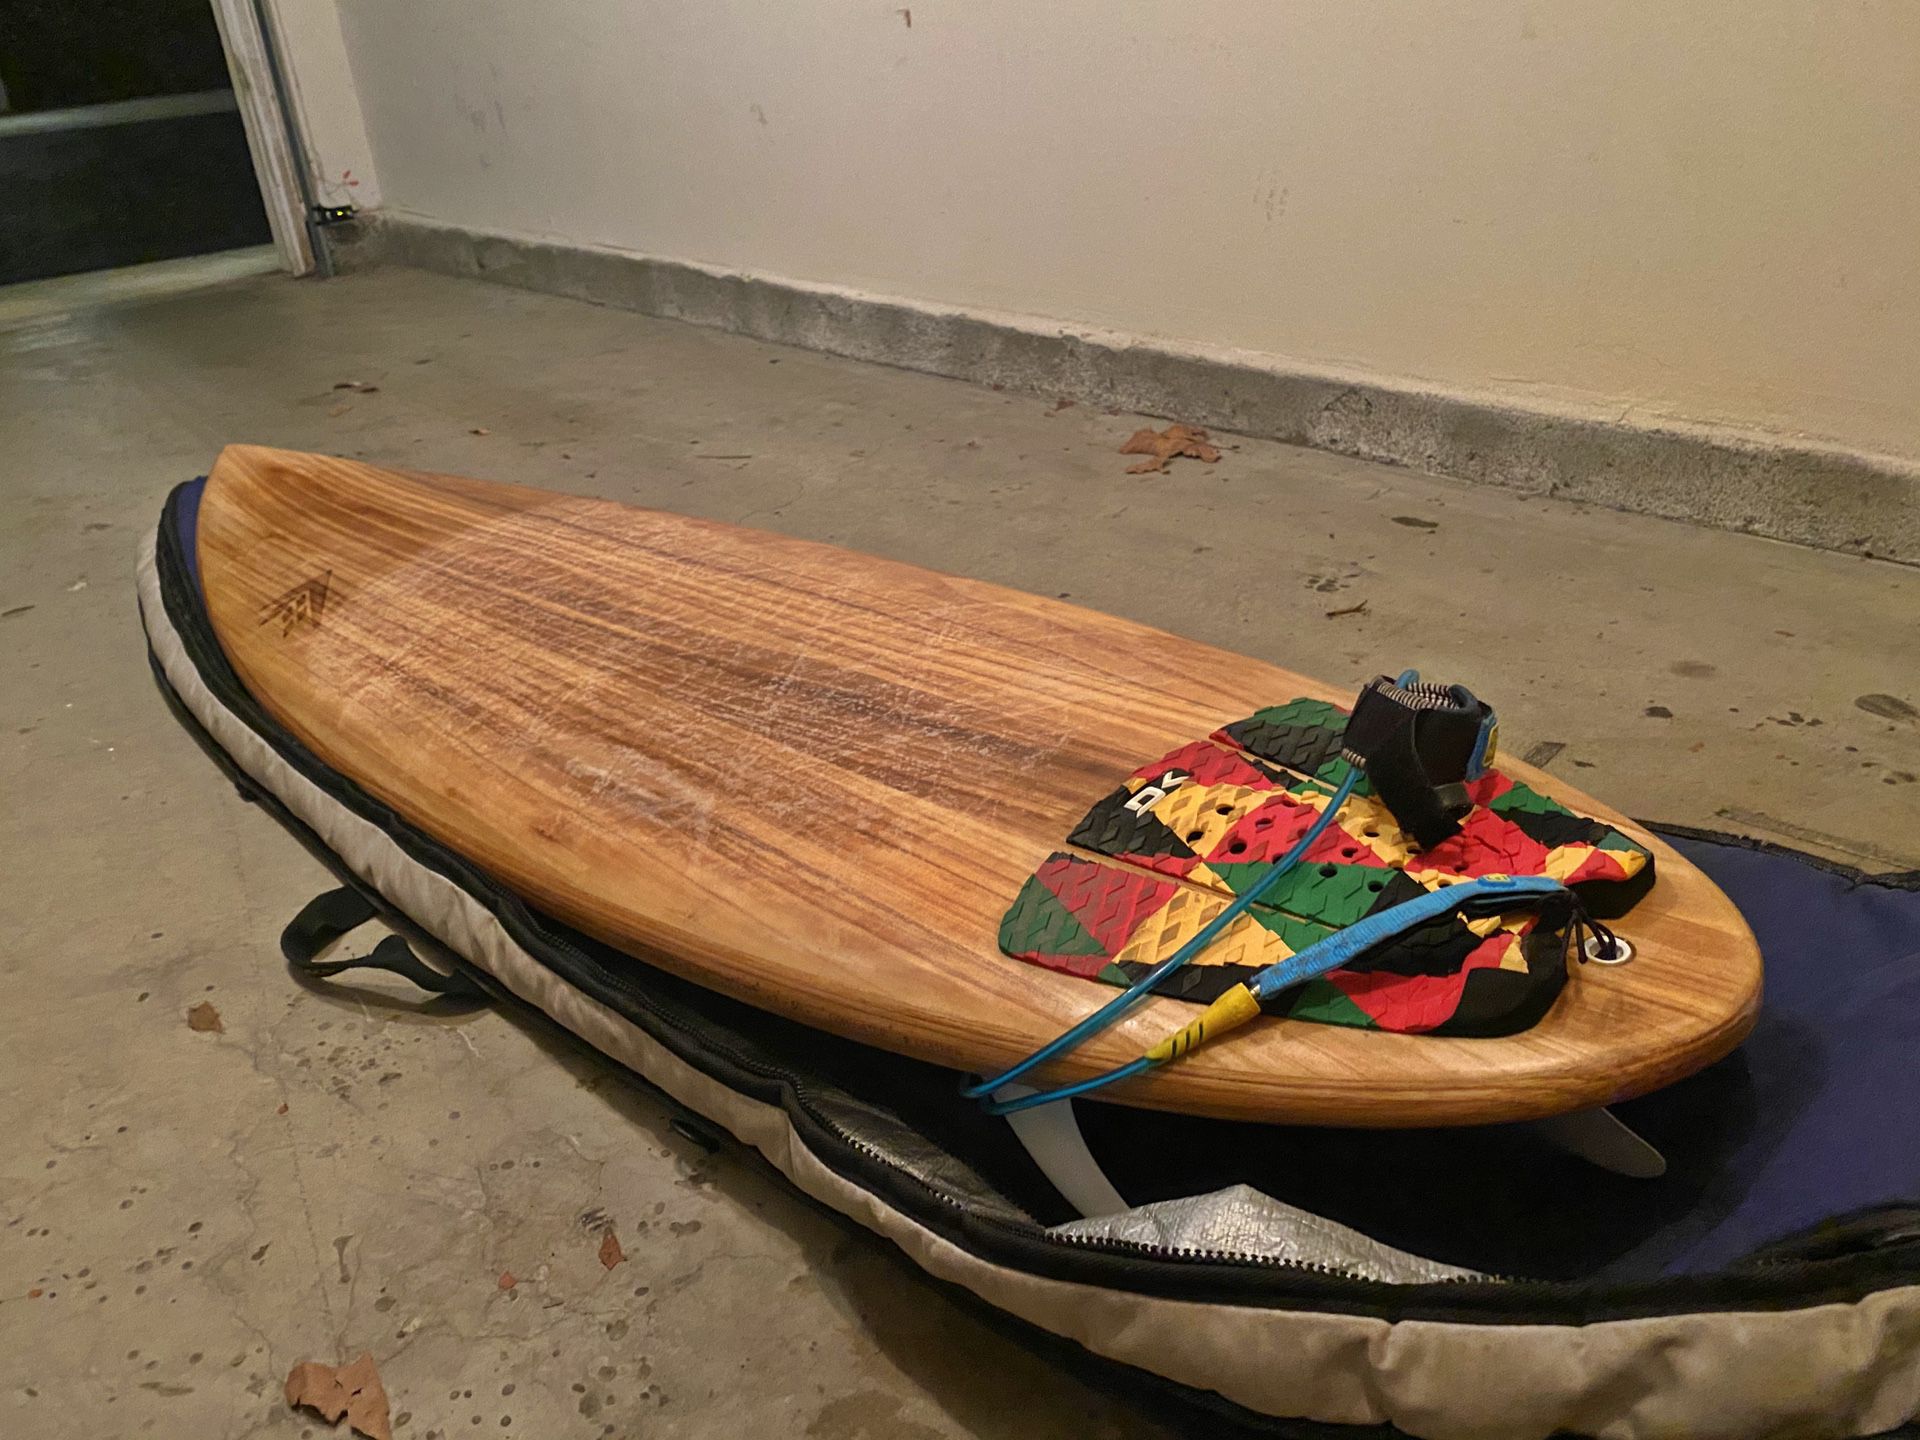 FireWire Bamboo 6’8 Surfboard $300